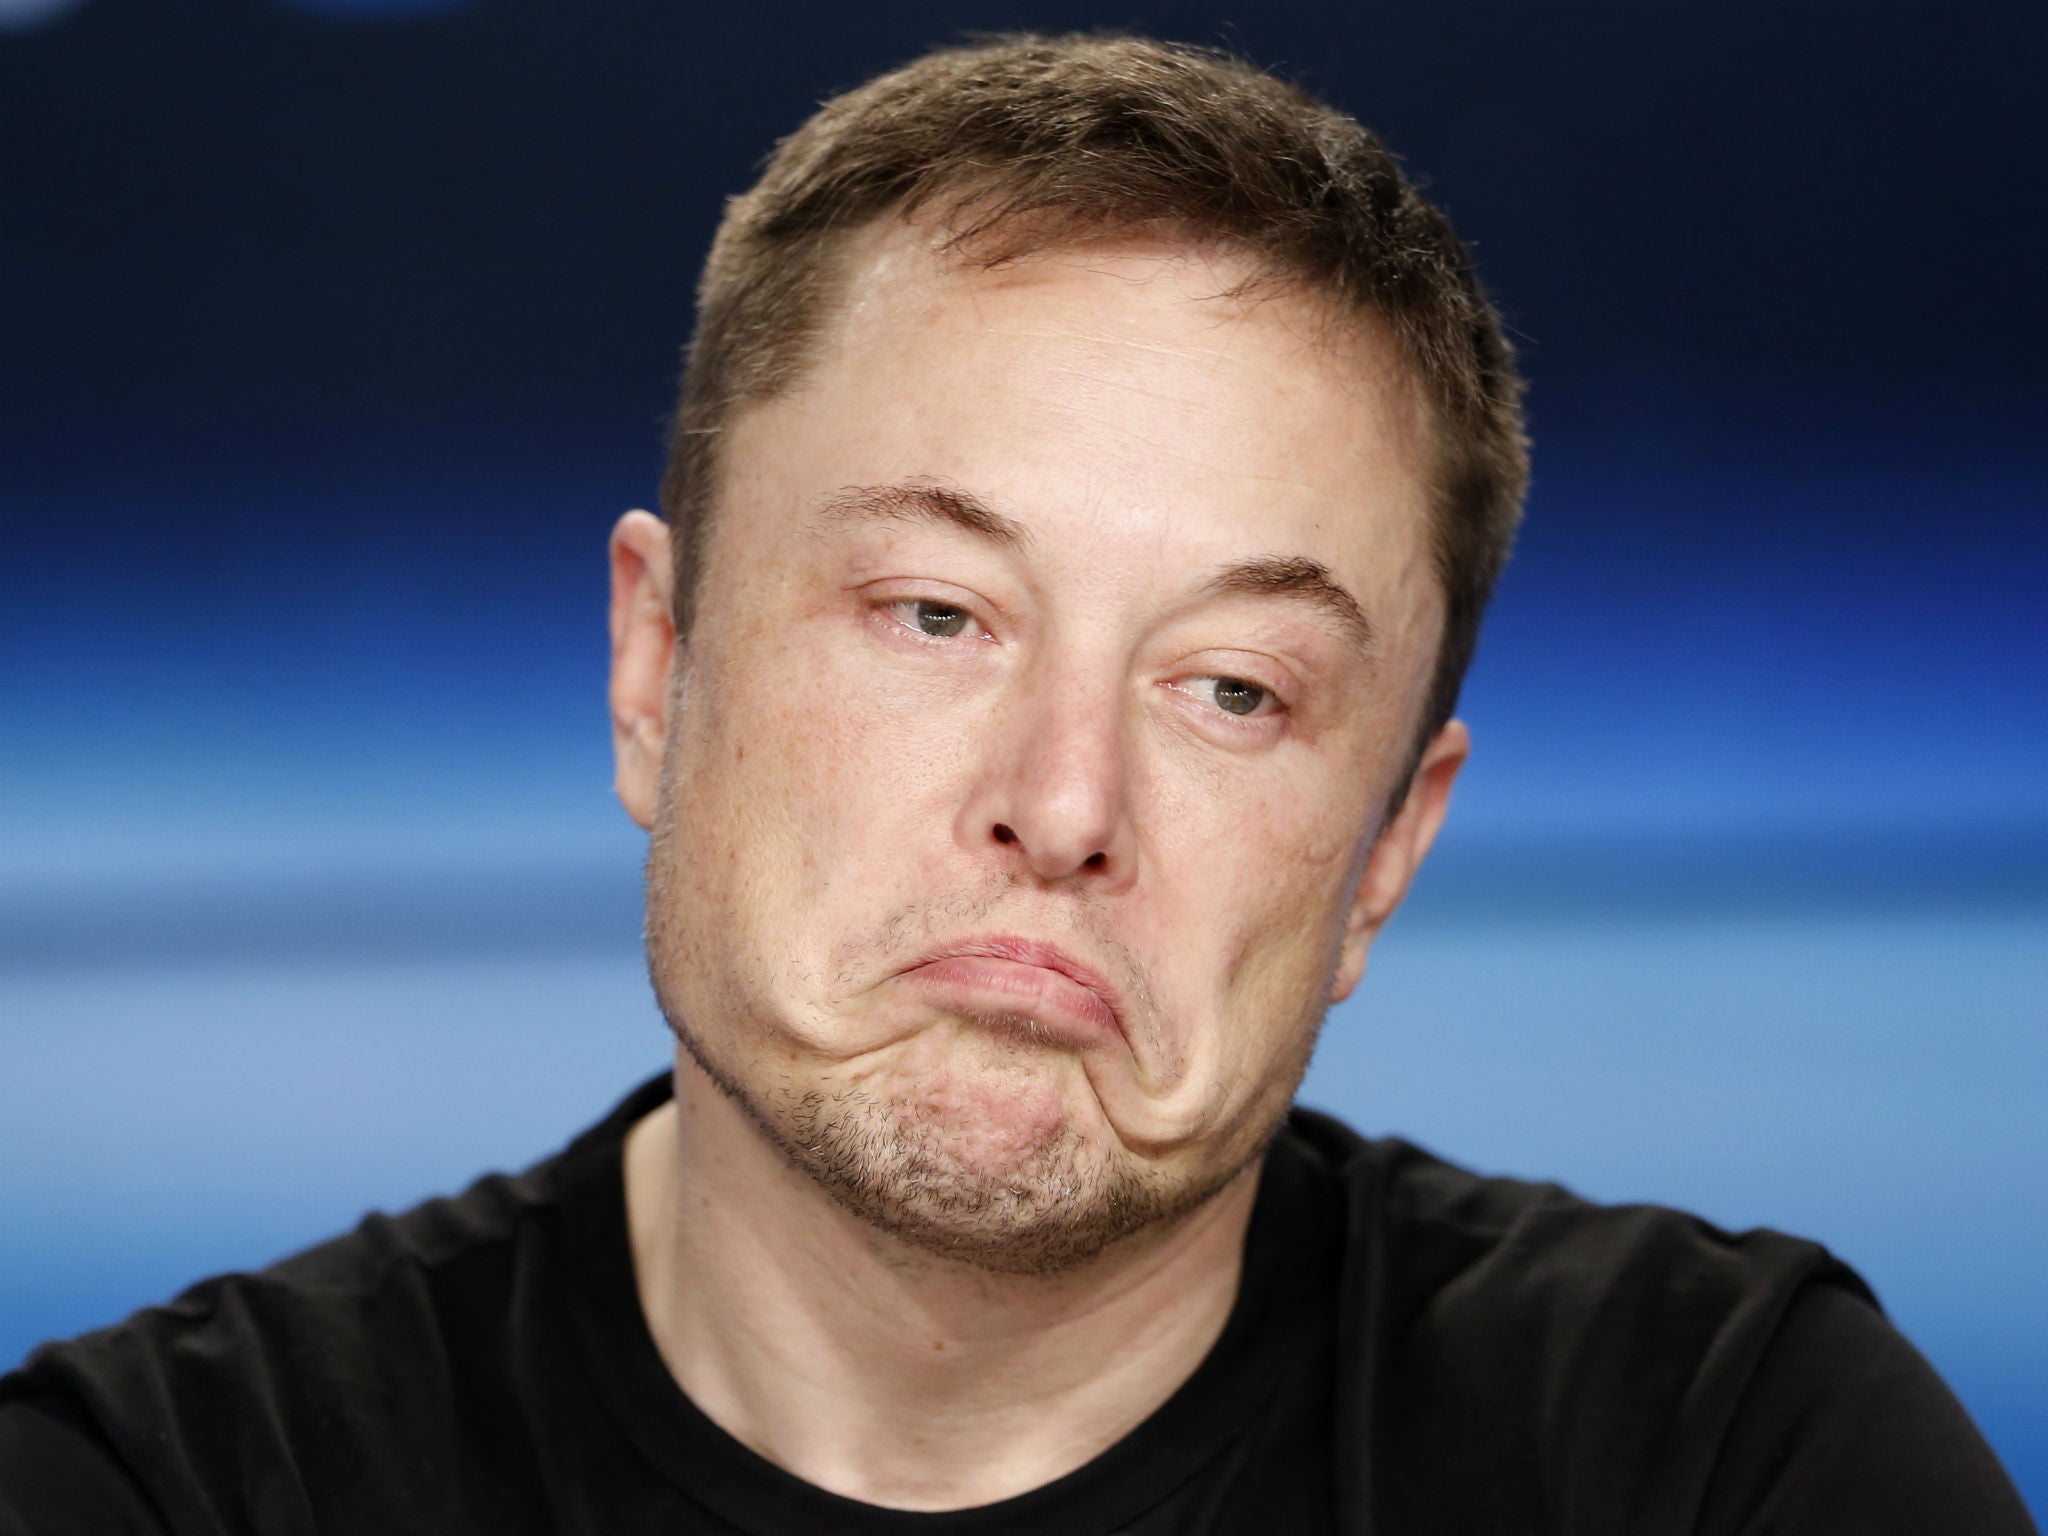 Tesla boss Elon Musk, who has attacked his media critics on Twitter